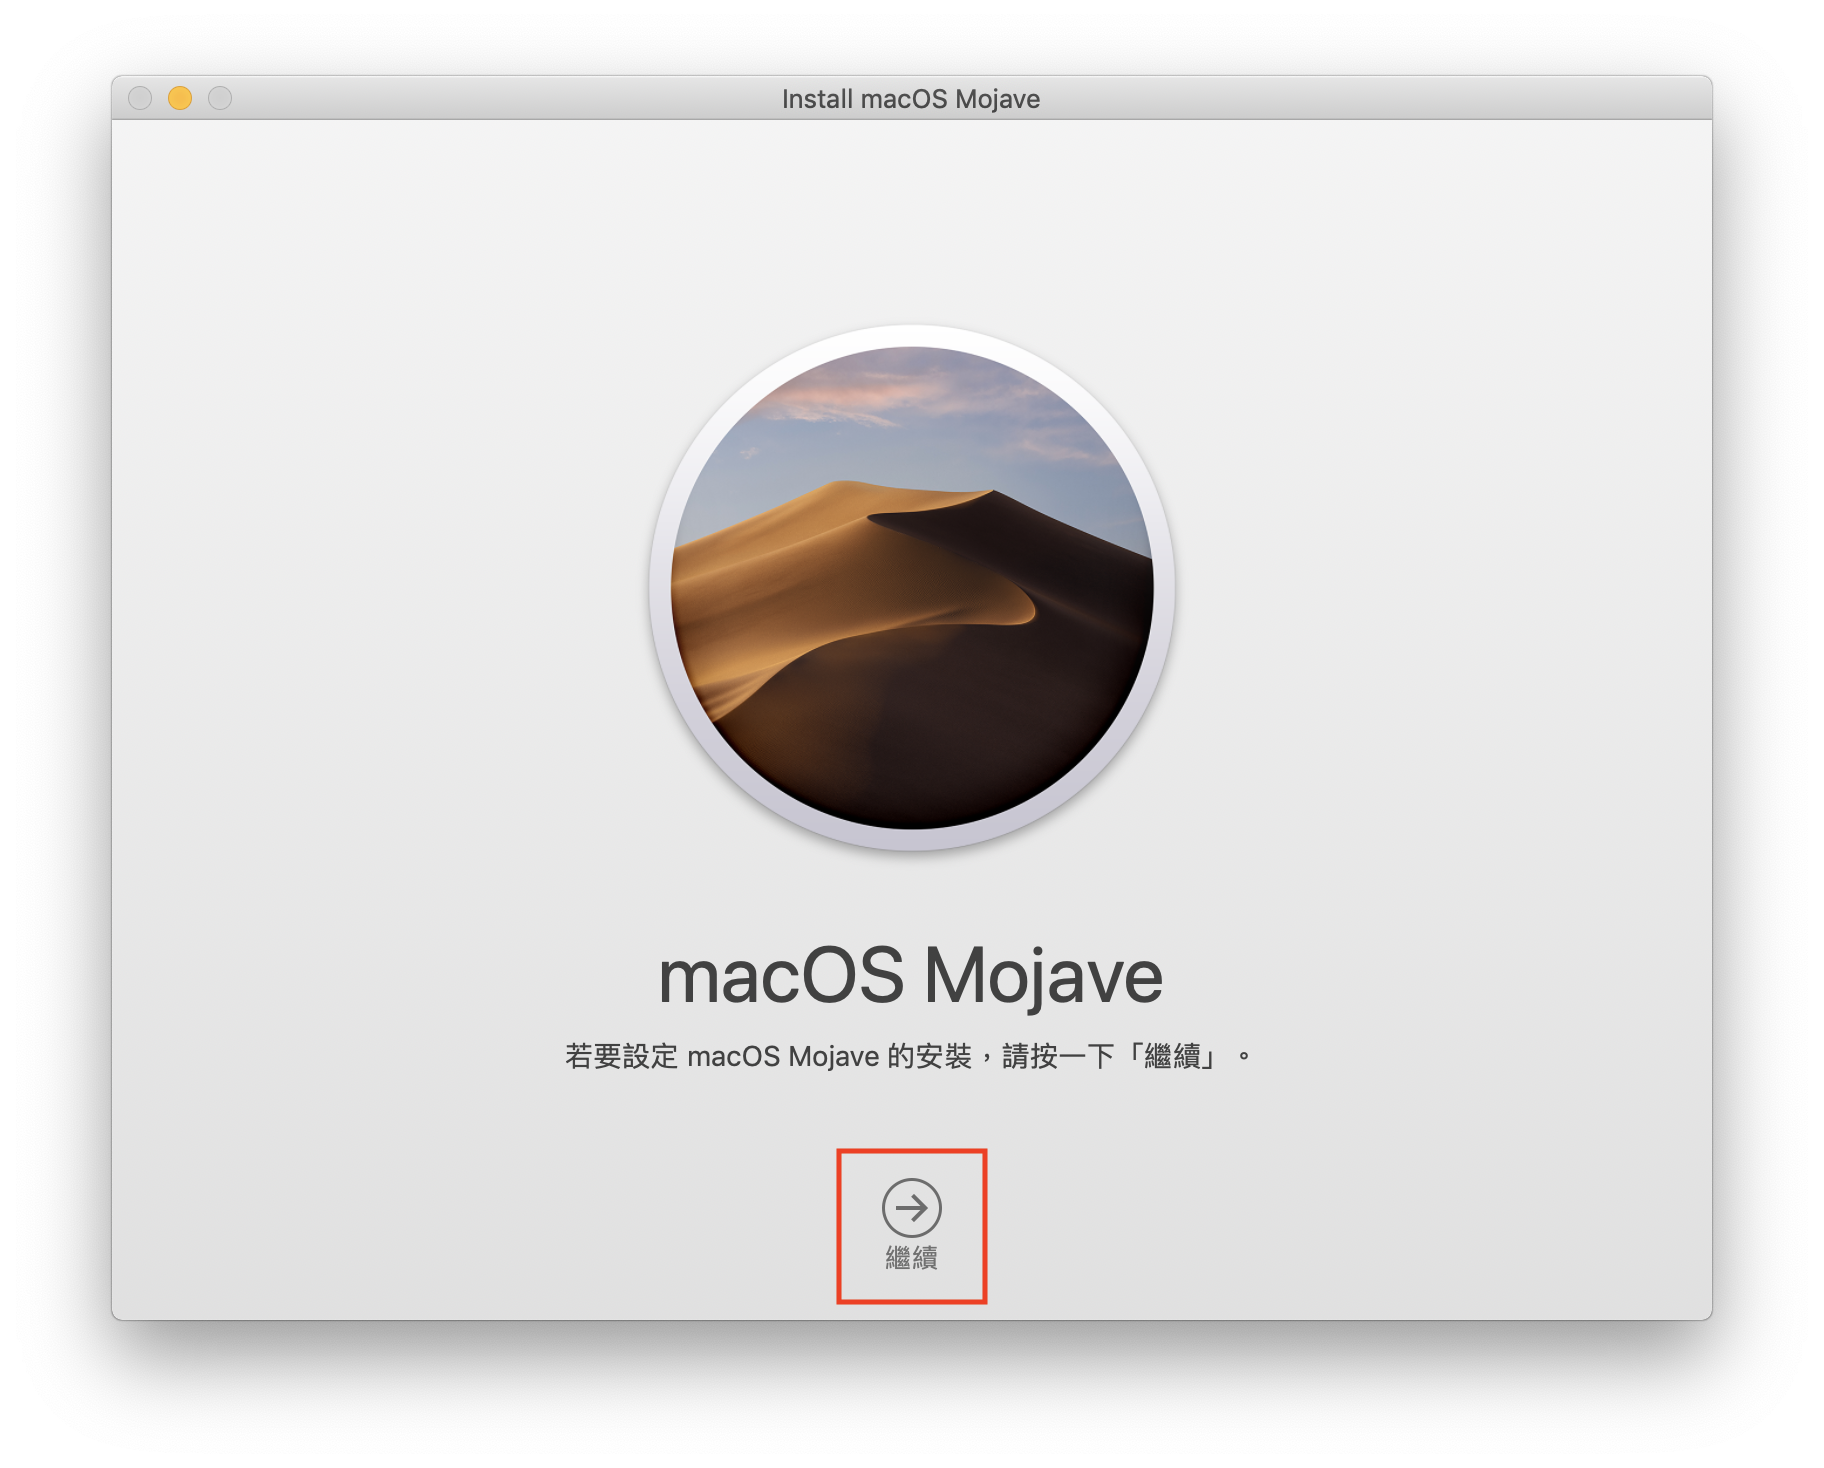 macOS 10.14、macOS Mojave、macOS 10.14 Beta